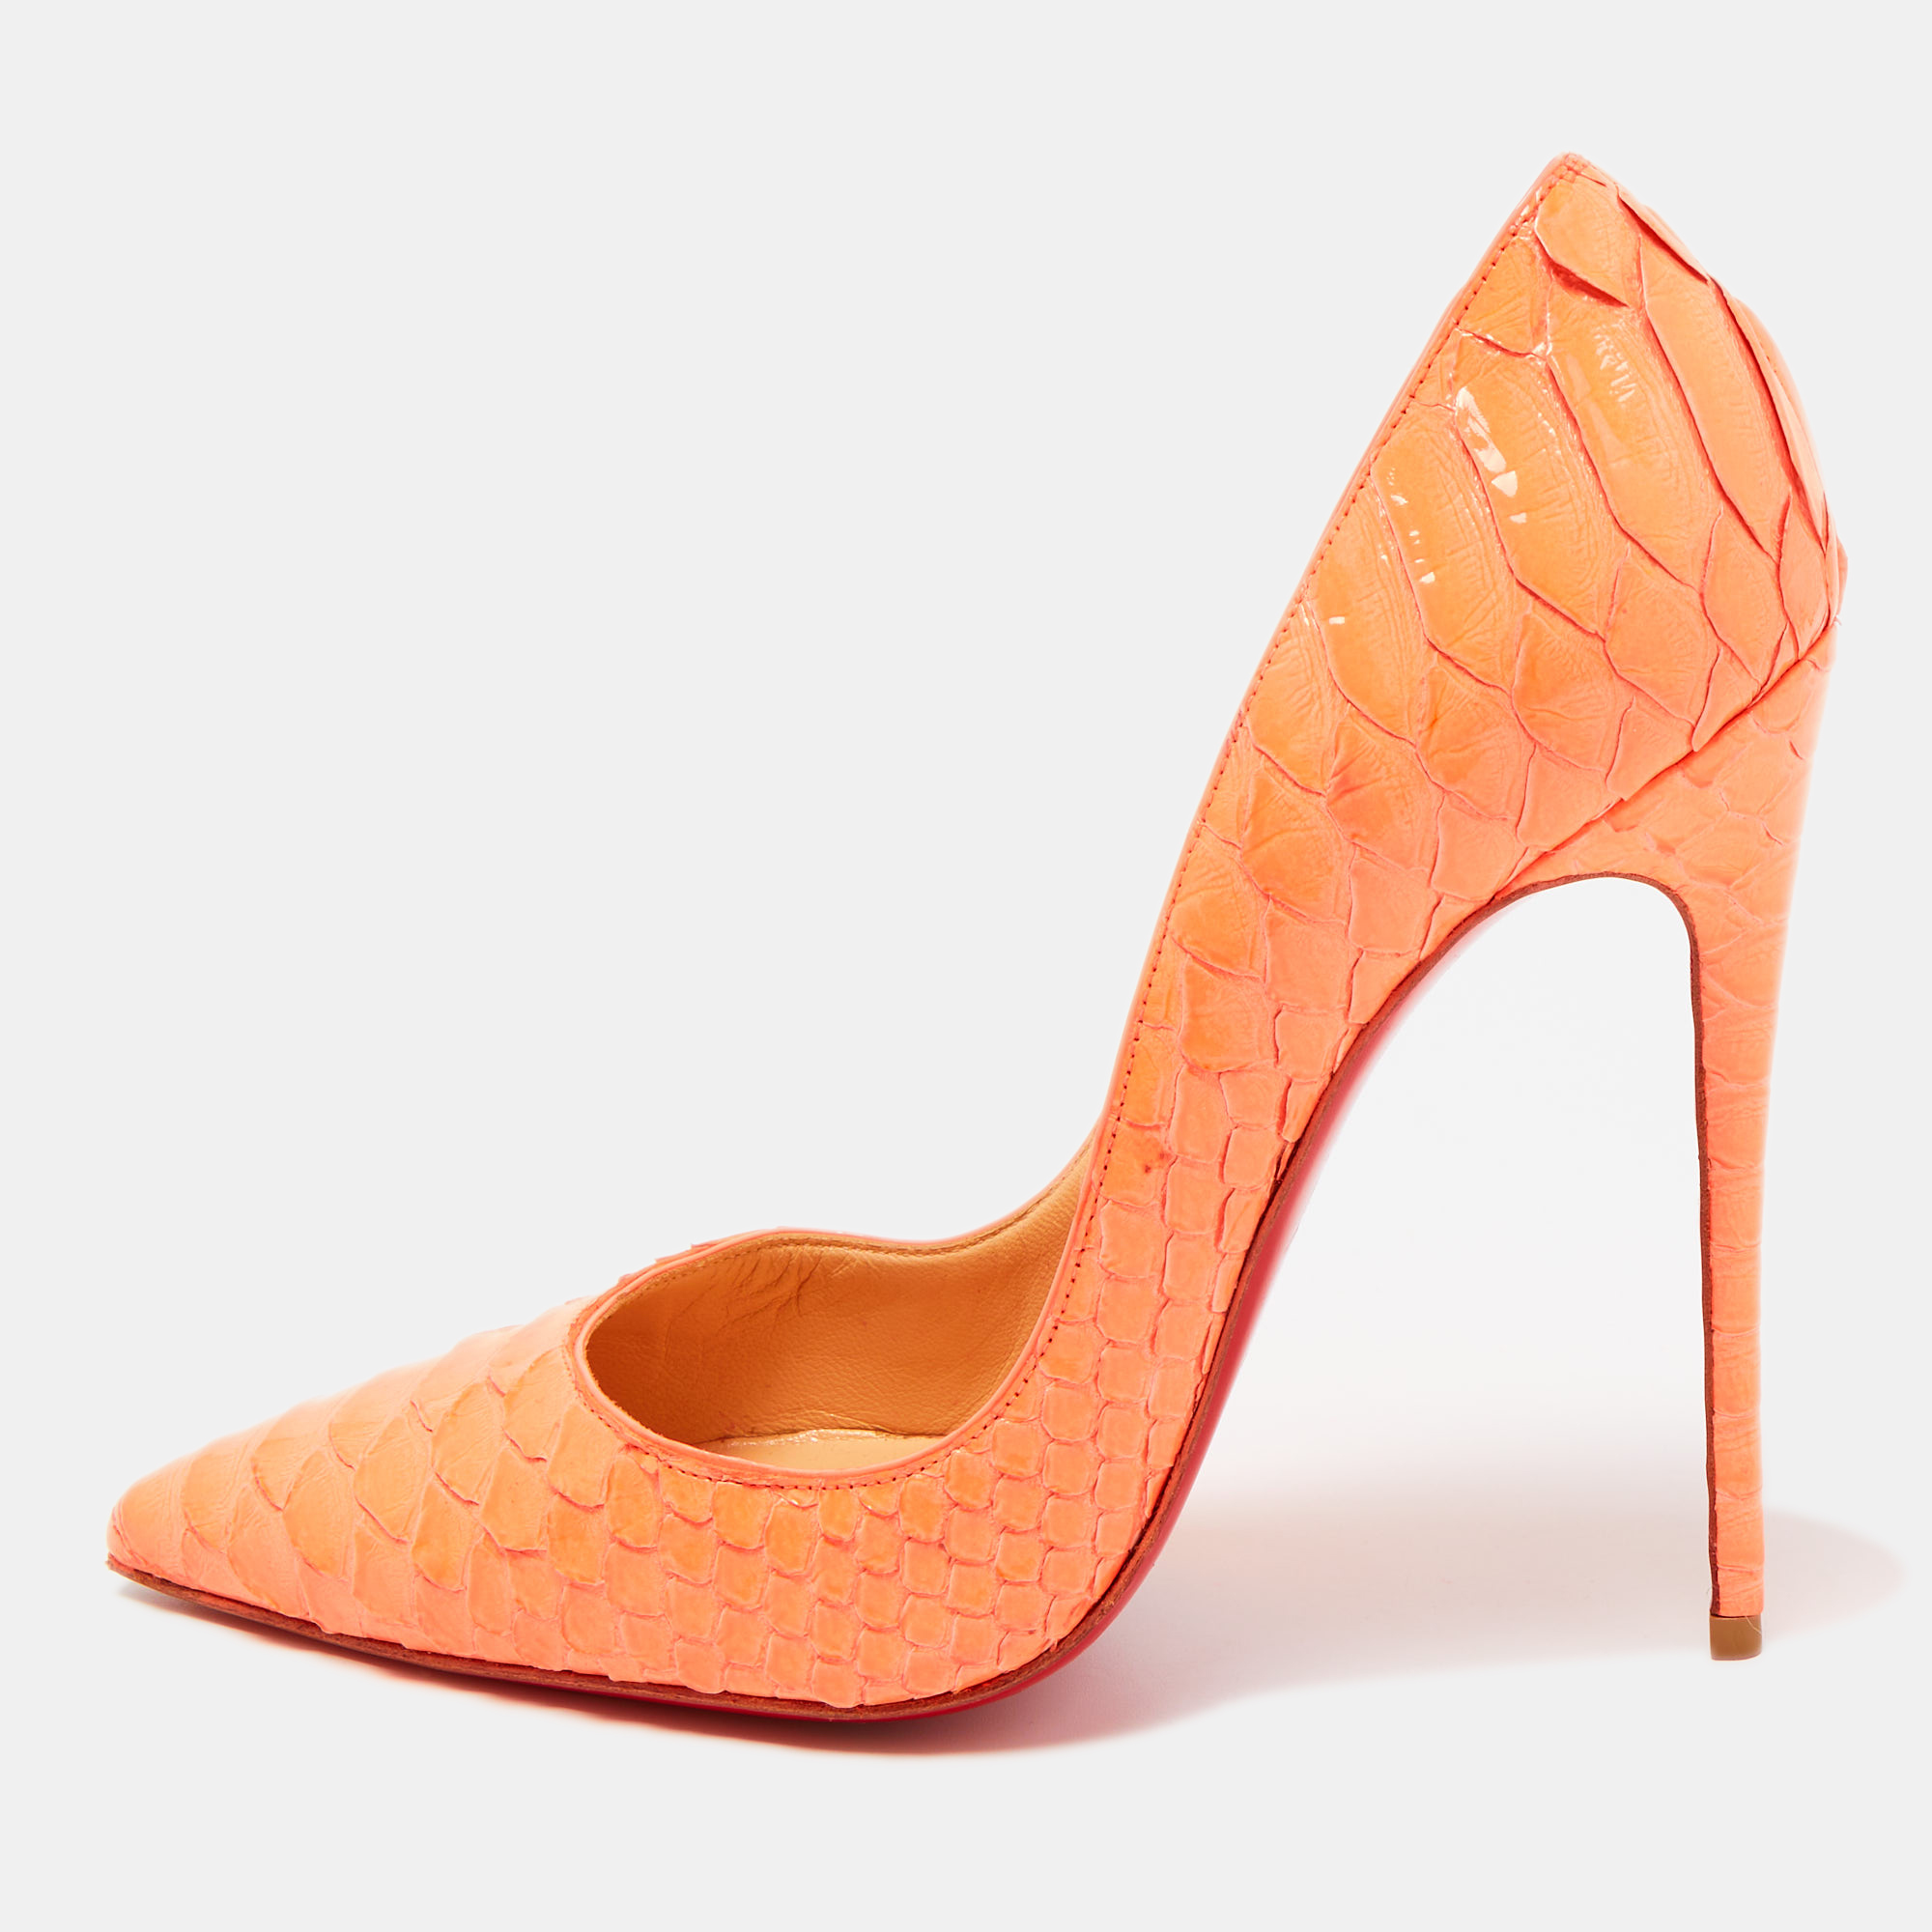 Christian Louboutin Neon Orange Python So Kate Pumps Size 39